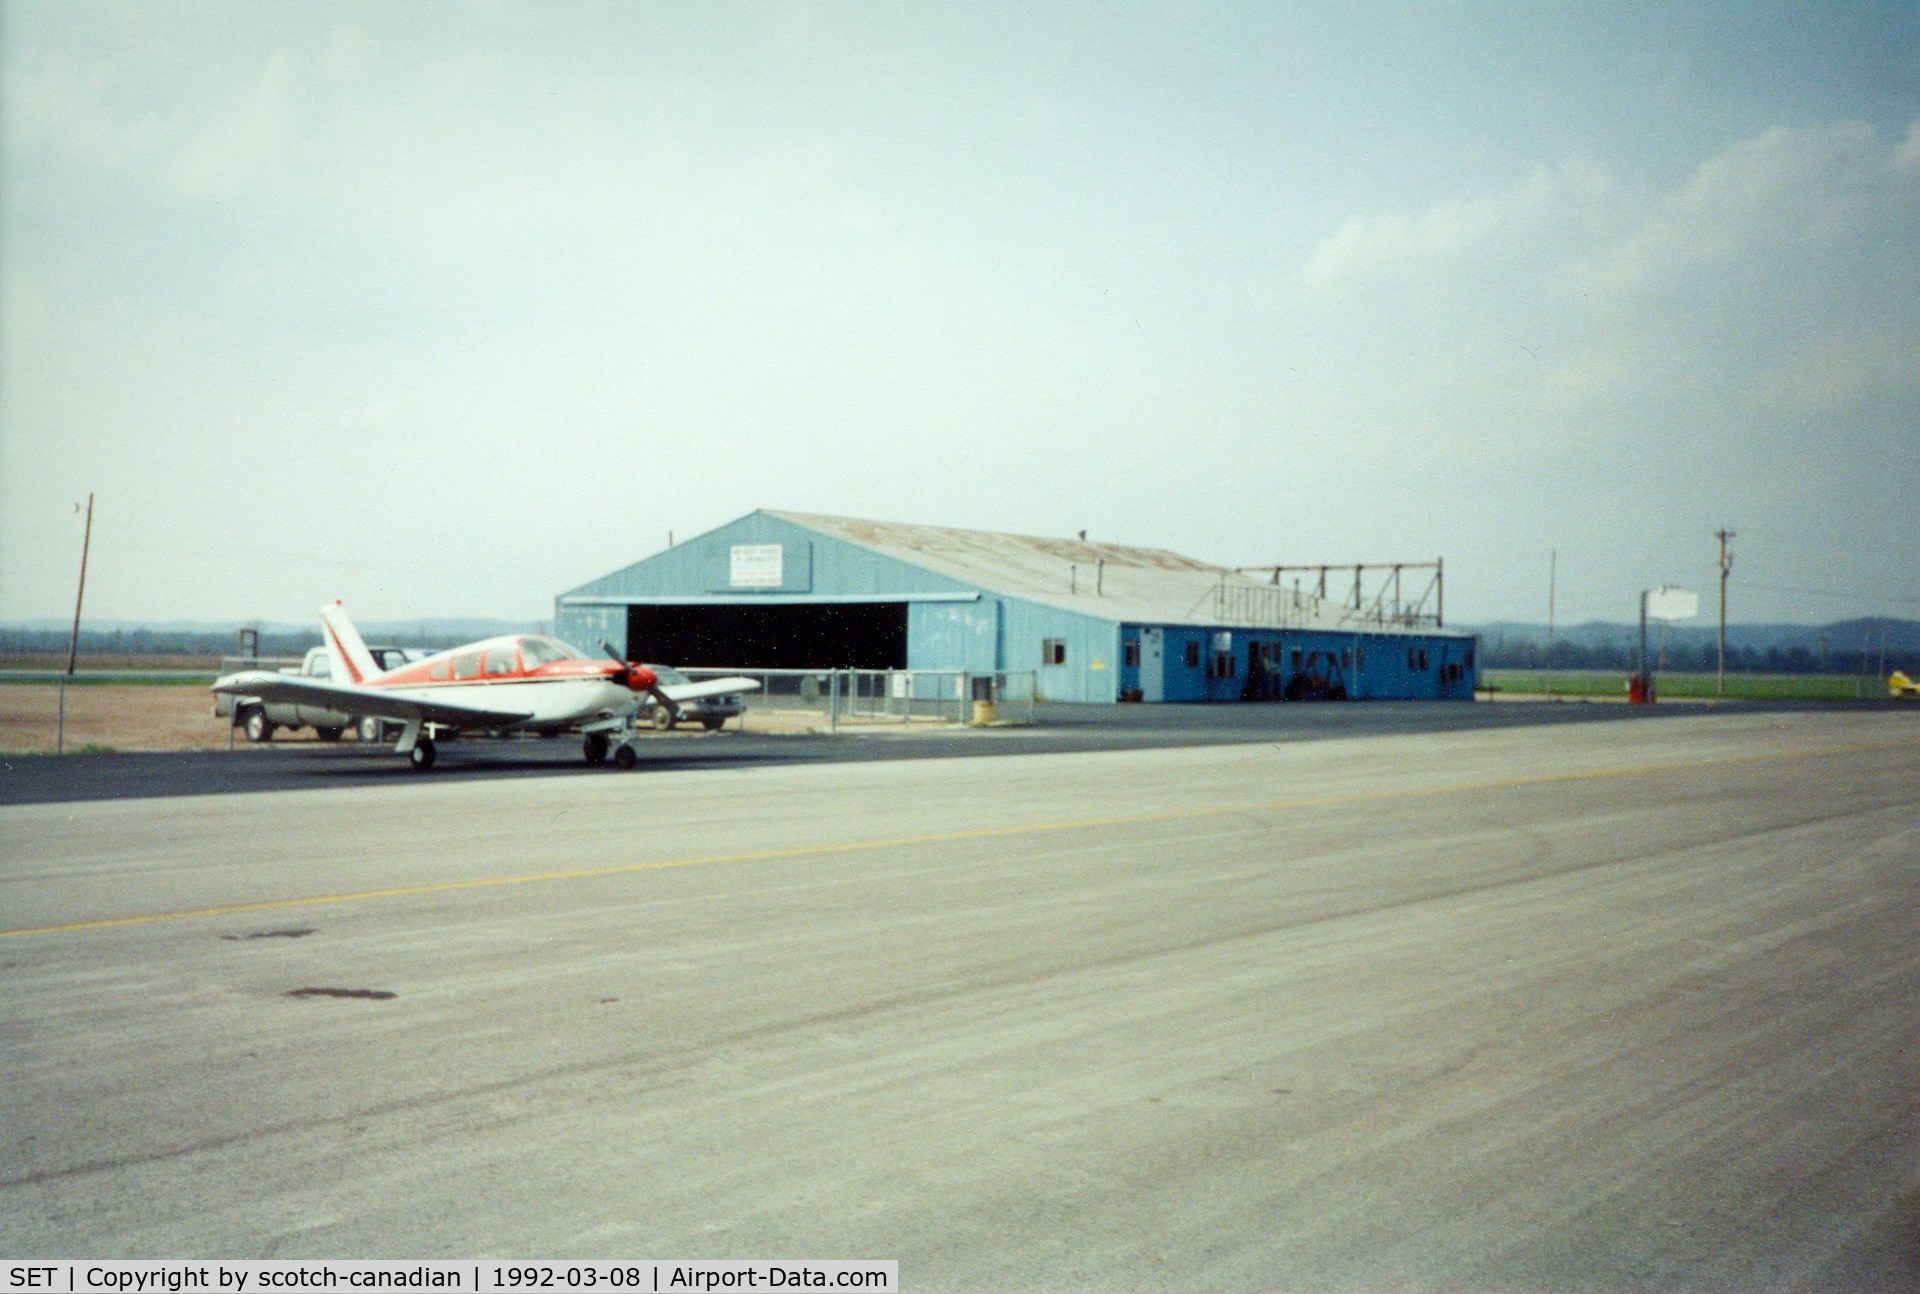 St Charles County Smartt Airport (SET) - Hangar at St. Charles County Smartt Airport, St. Charles, MO. In 1992 the FAA identifier was 3SZ.